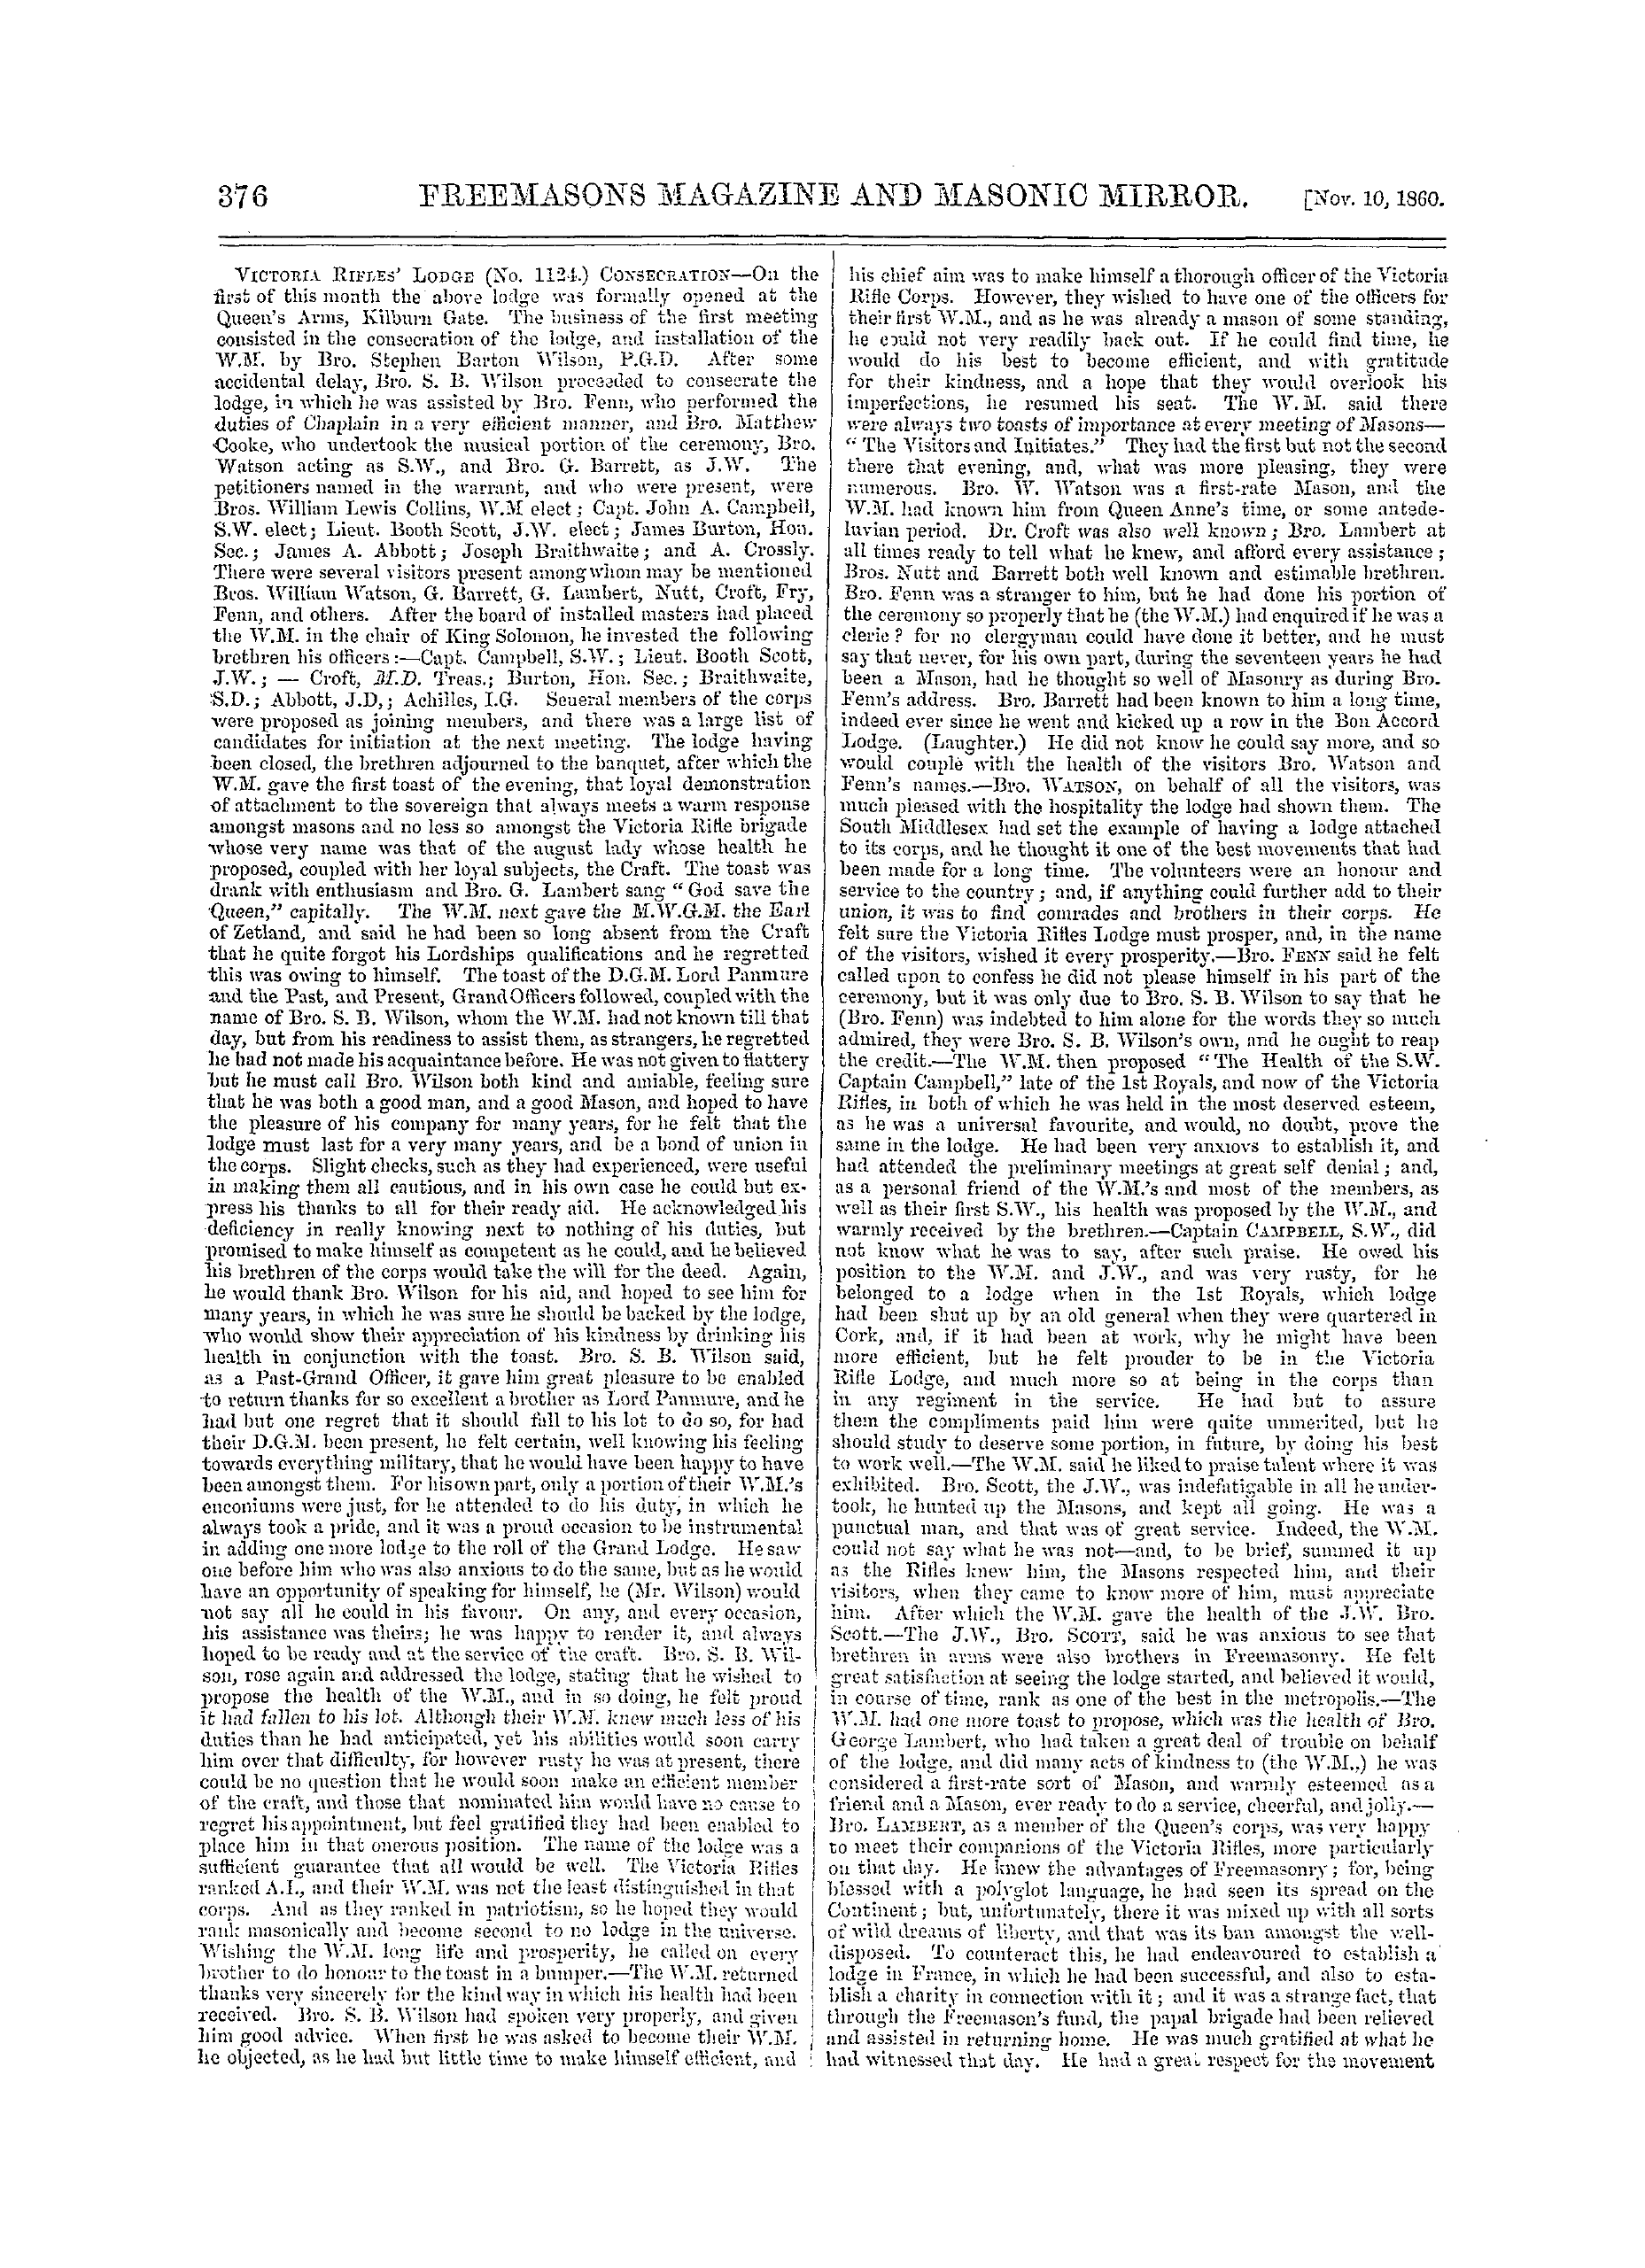 The Freemasons' Monthly Magazine: 1860-11-10 - Metropolitan.